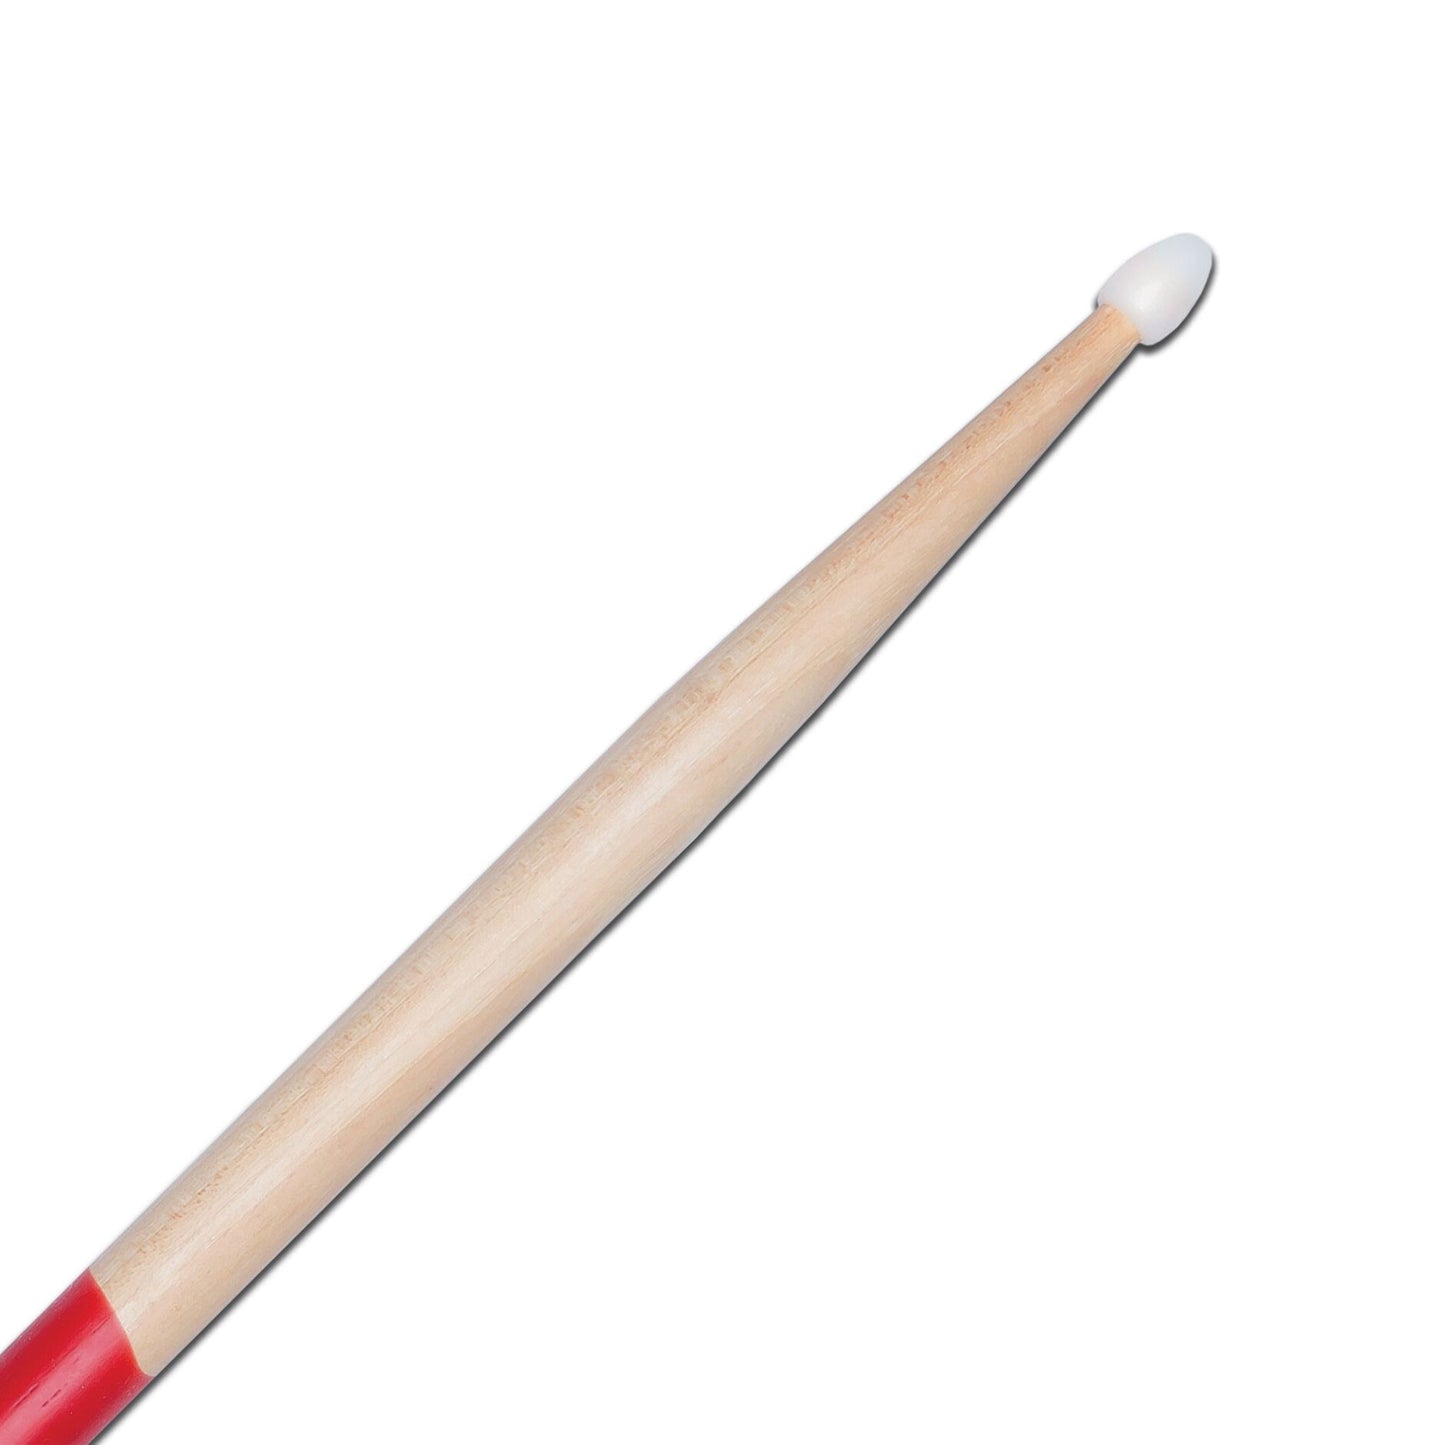 American Classic® 5B Nylon Vic Grip Drumsticks